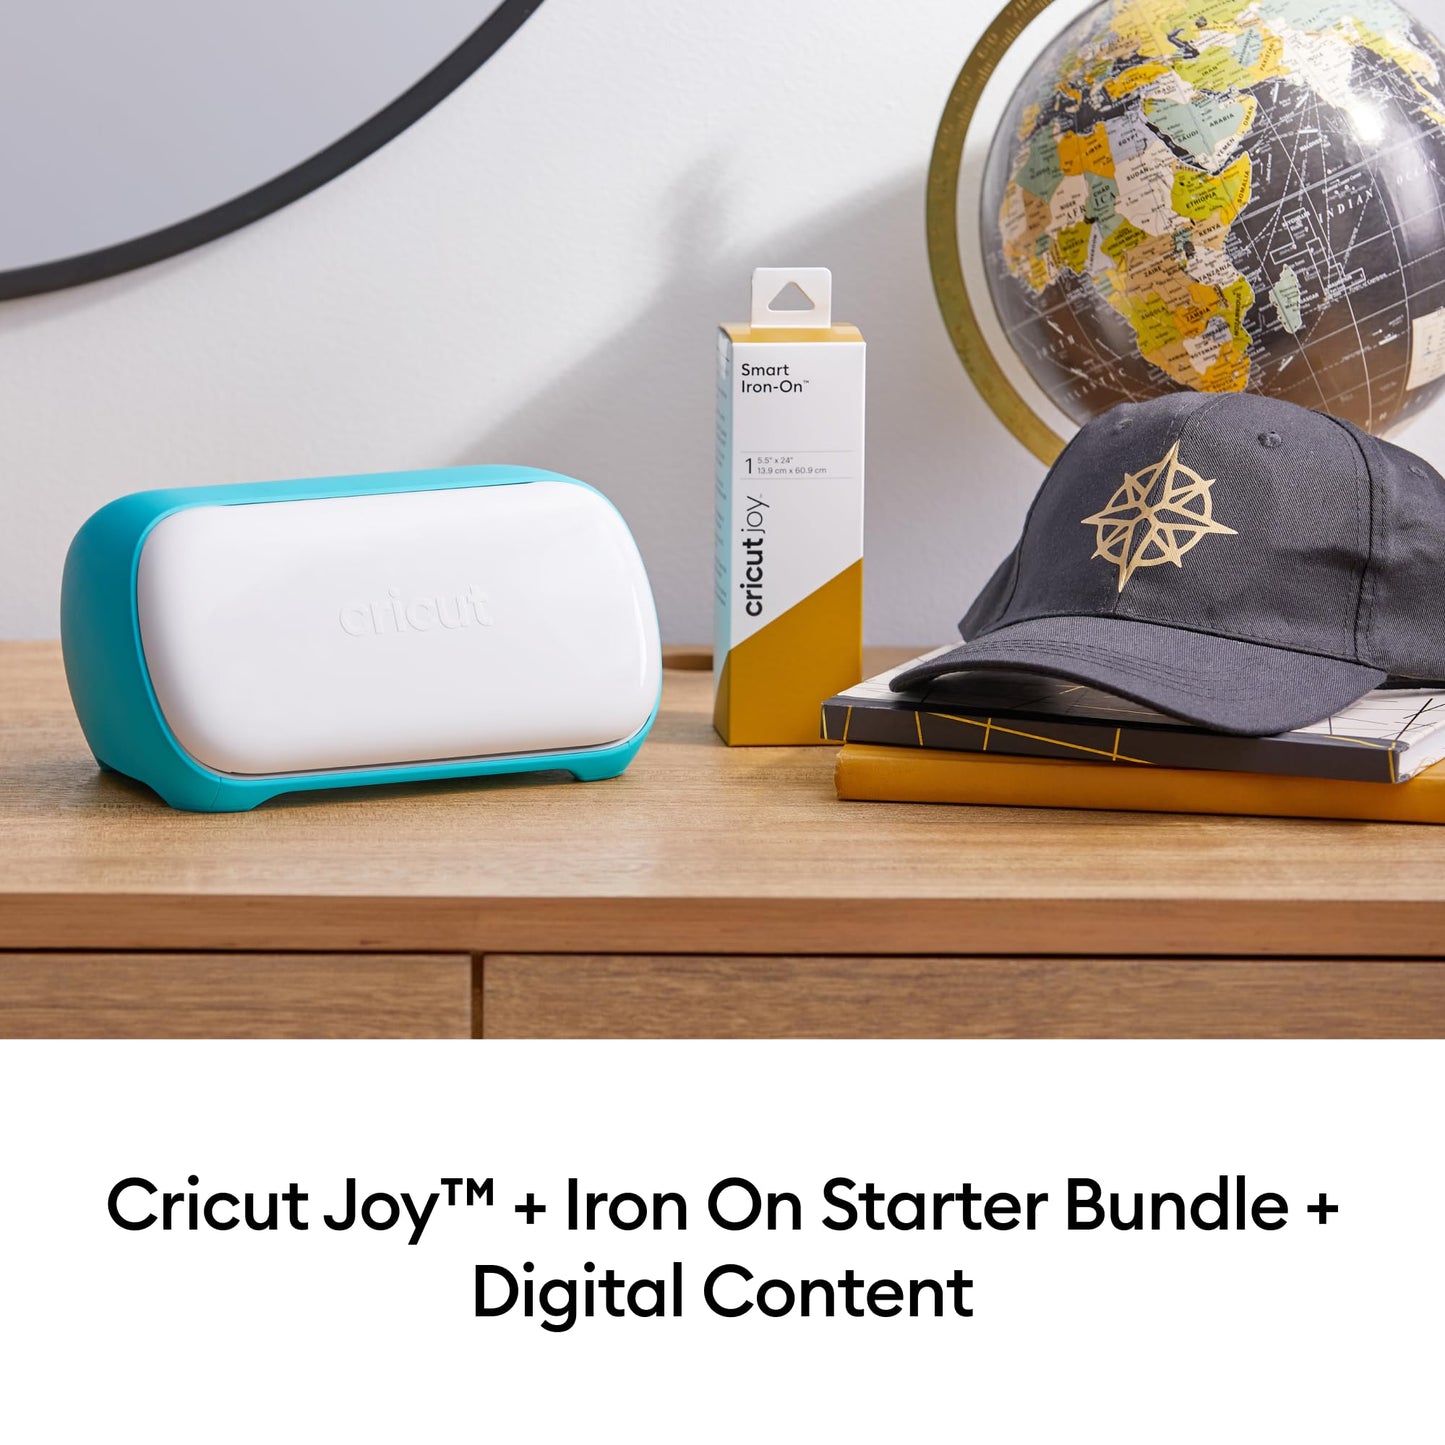 Cricut Joy & Digital Content Library (30 Images) - Smart Iron On Bundle - Includes Cricut Joy, EasyPress Mini Heat Press, Heat Press Mat, 5-Piece Tool Set & Smart Iron On HTV 2f Roll, Black